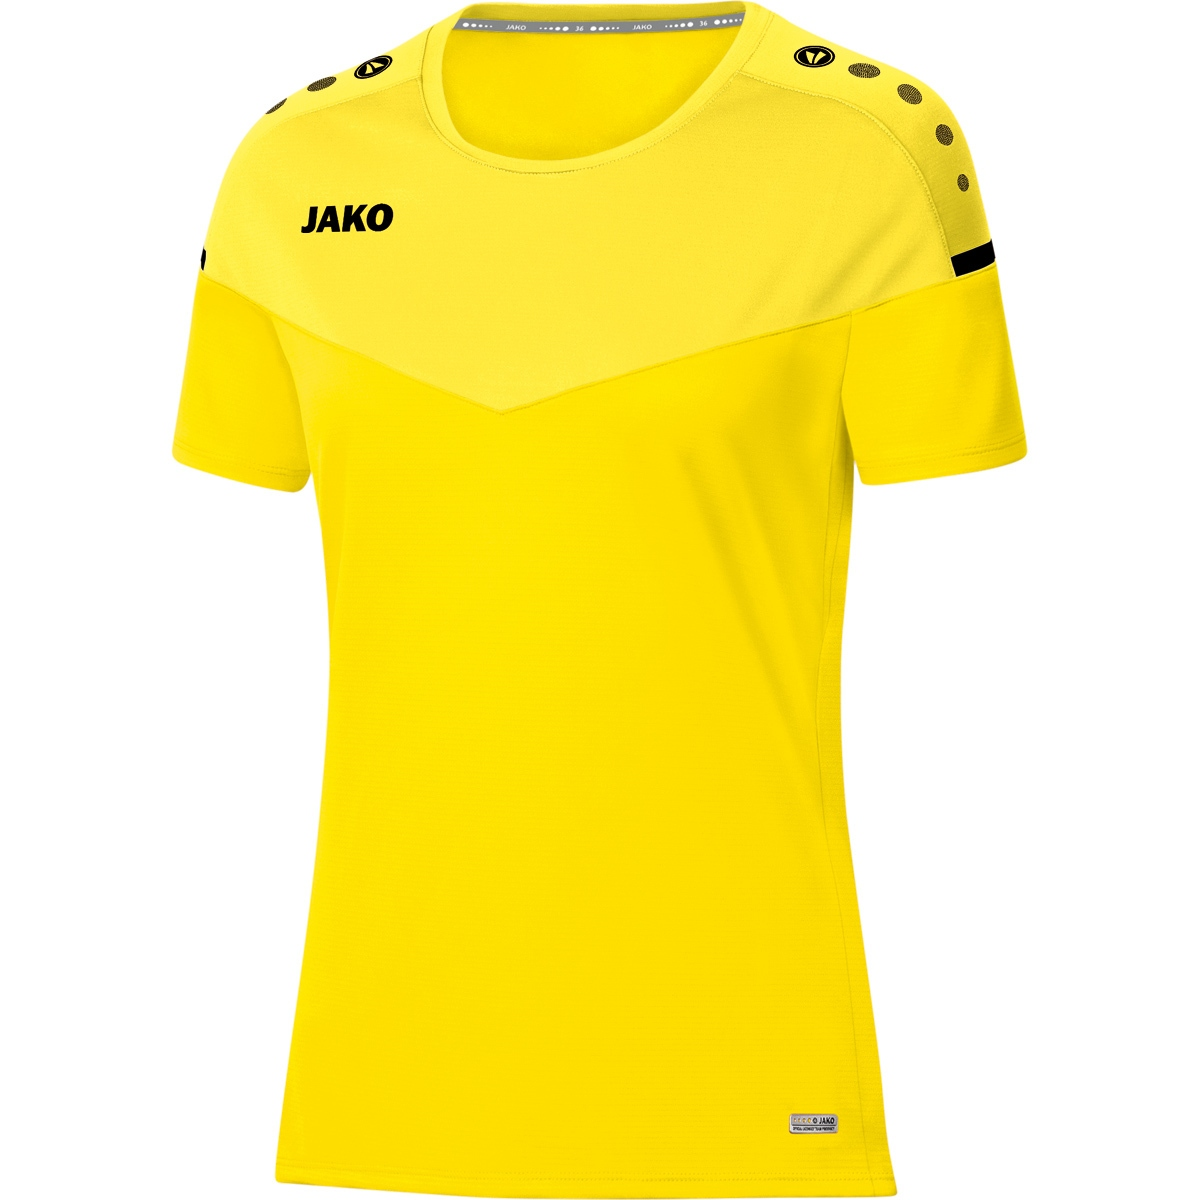 JAKO T-Shirt Champ Gr. light, 2.0 40, 6120 Damen, citro/citro